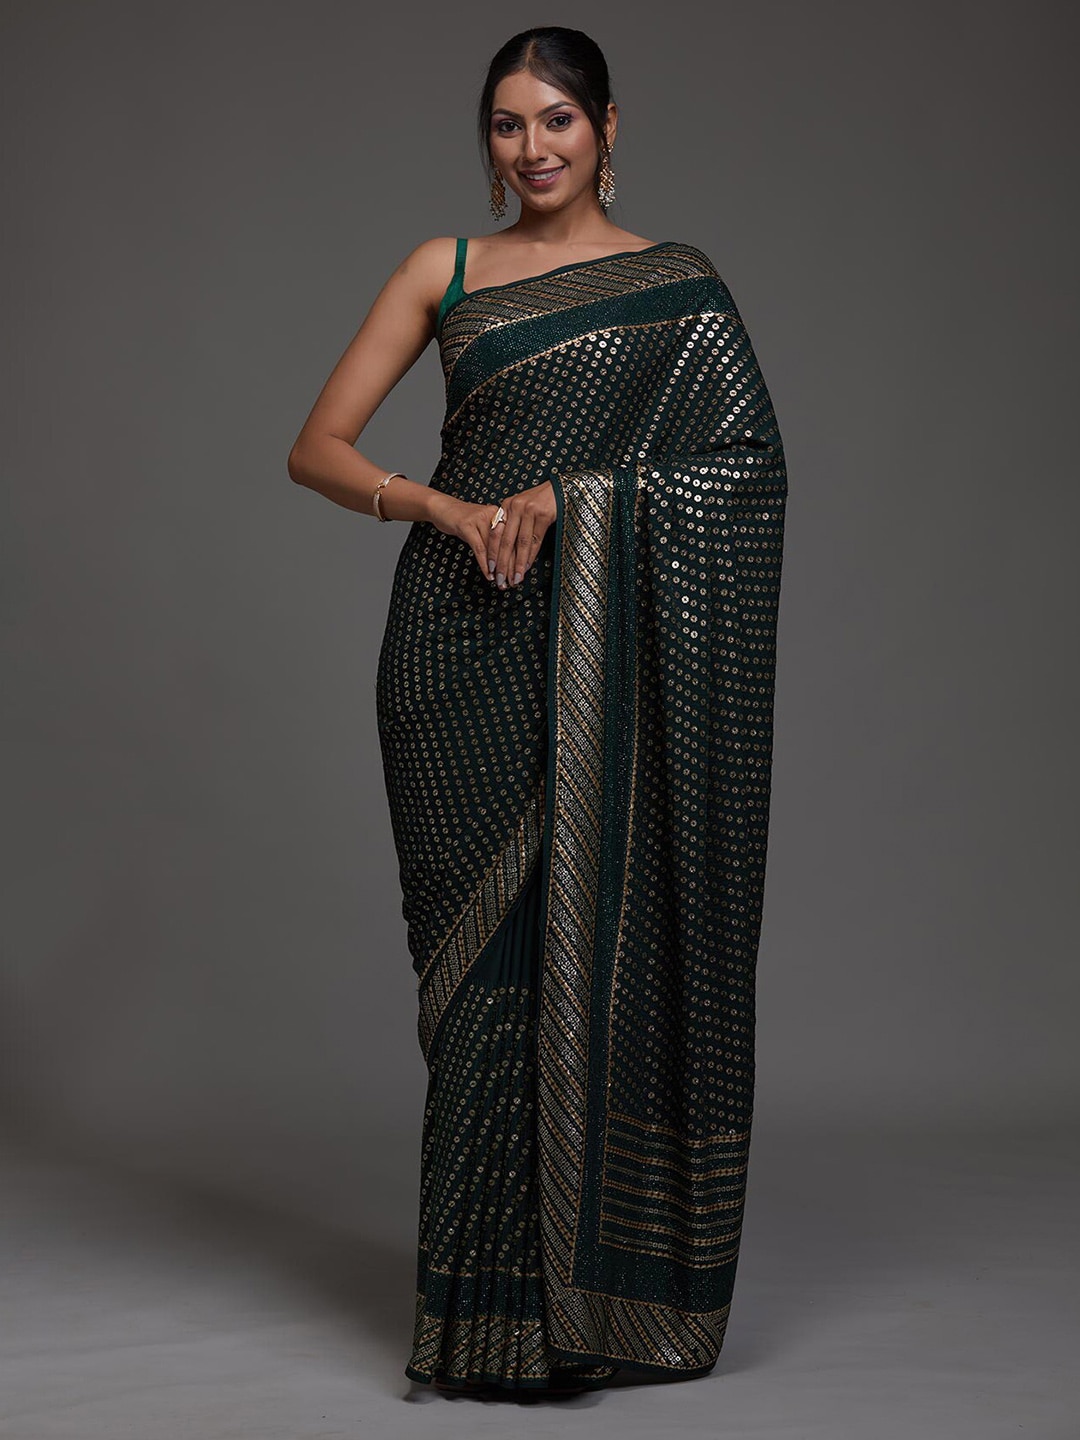 Koskii Green & Gold-Toned Embellished Saree Price in India